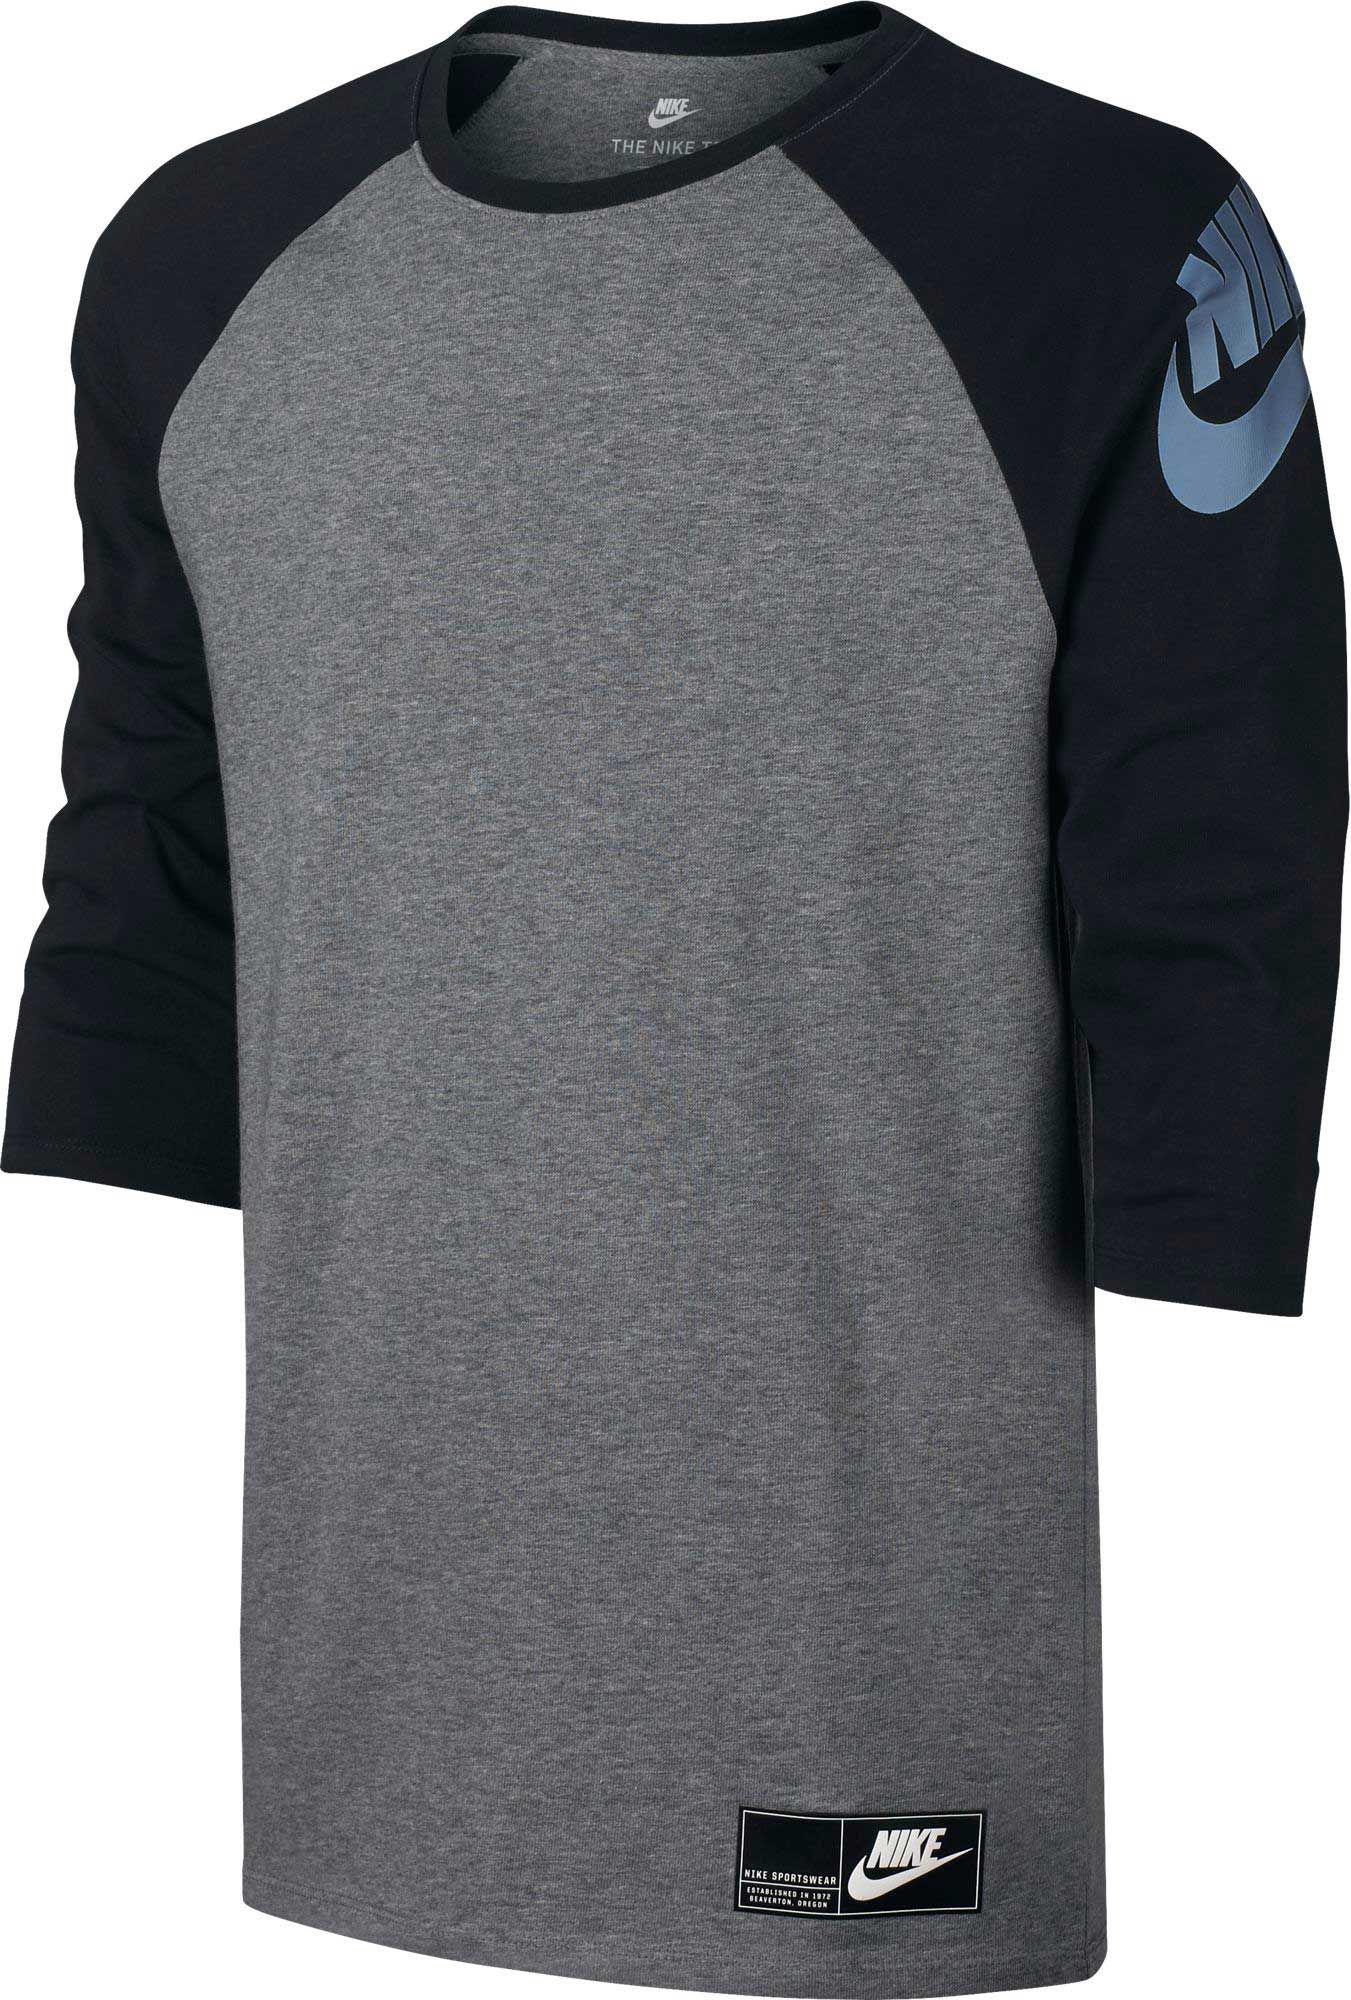 Nike Cotton Sportswear Heavyweight Three Quarter Length Sleeve Shirt in ...